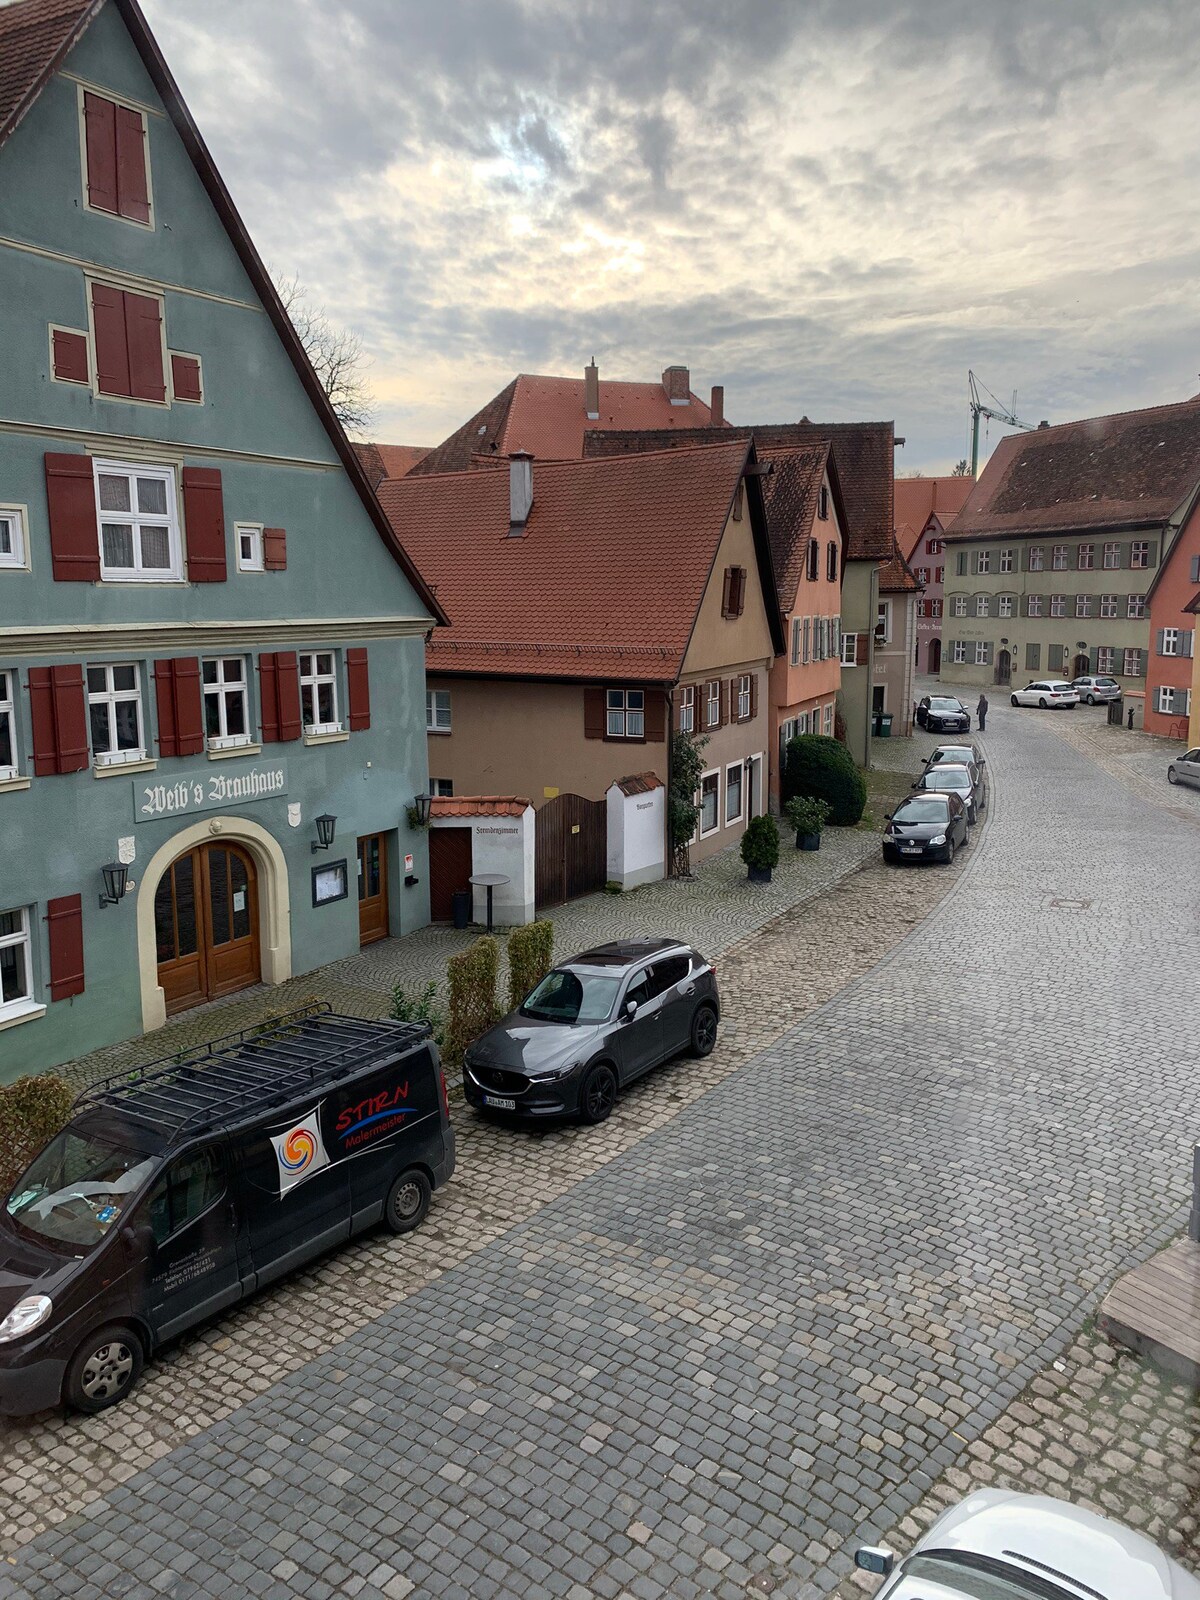 Dinkelsbühl老城区景观床